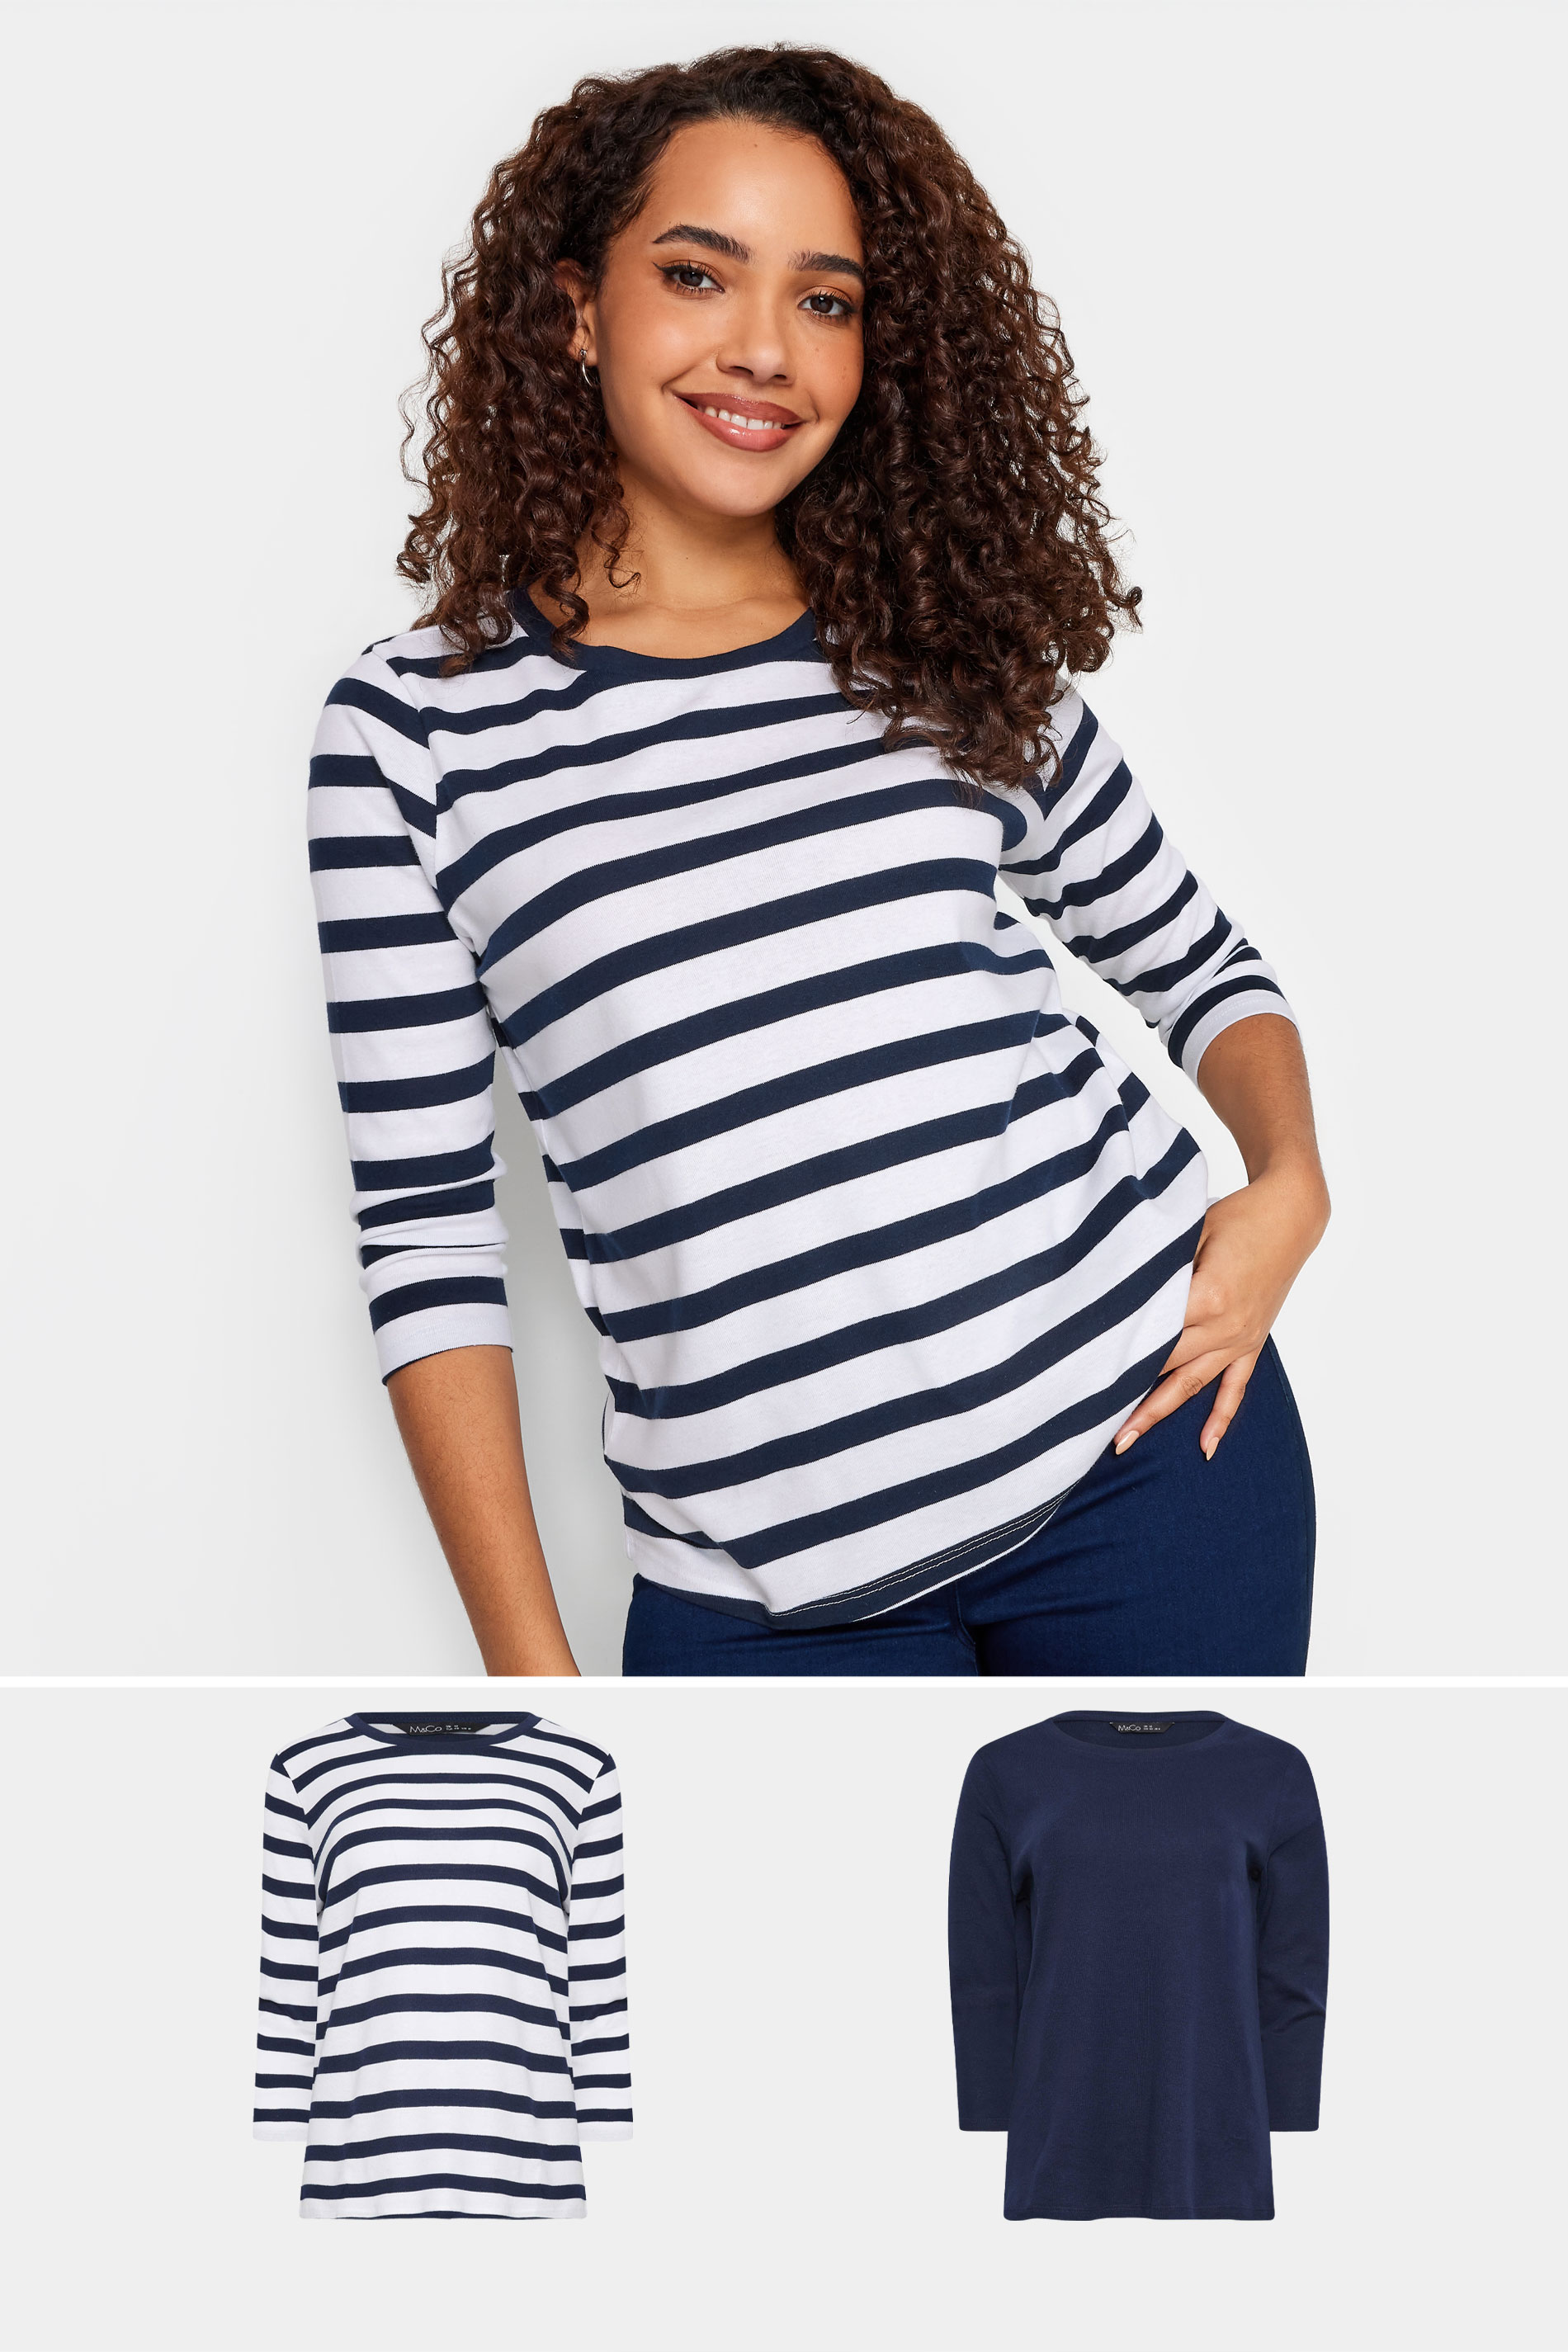 M&Co 2 Pack Navy Blue Striped & Plain 3/4 Sleeve Cotton Tops | M&Co 1